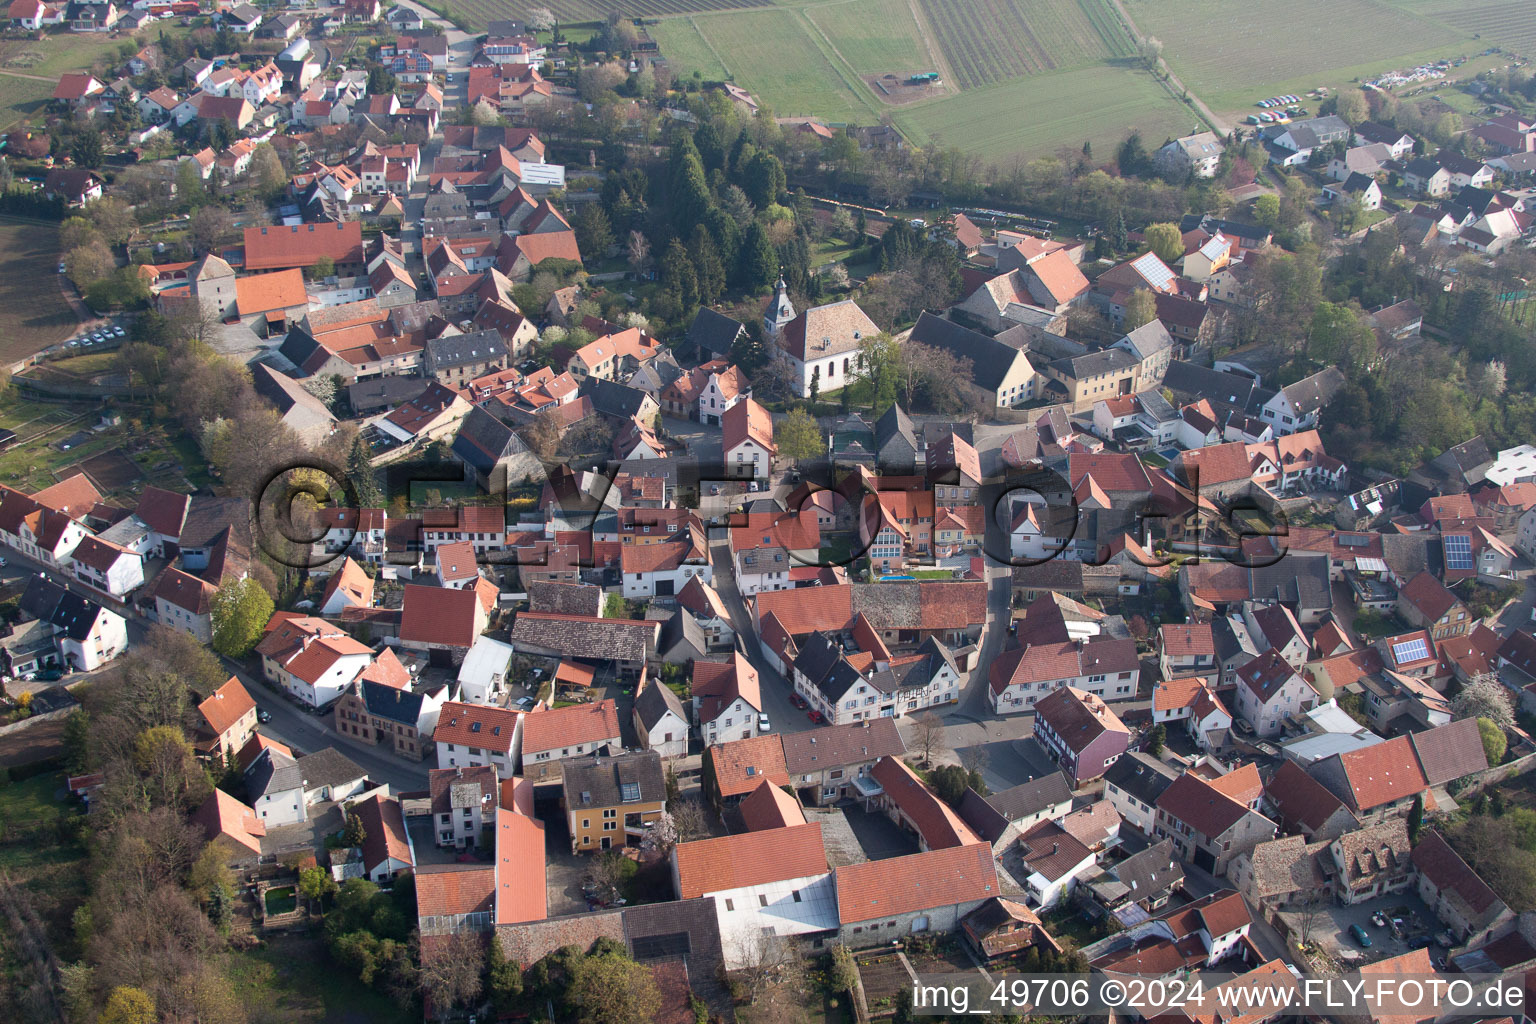 Village view in Eppelsheim in the state Rhineland-Palatinate